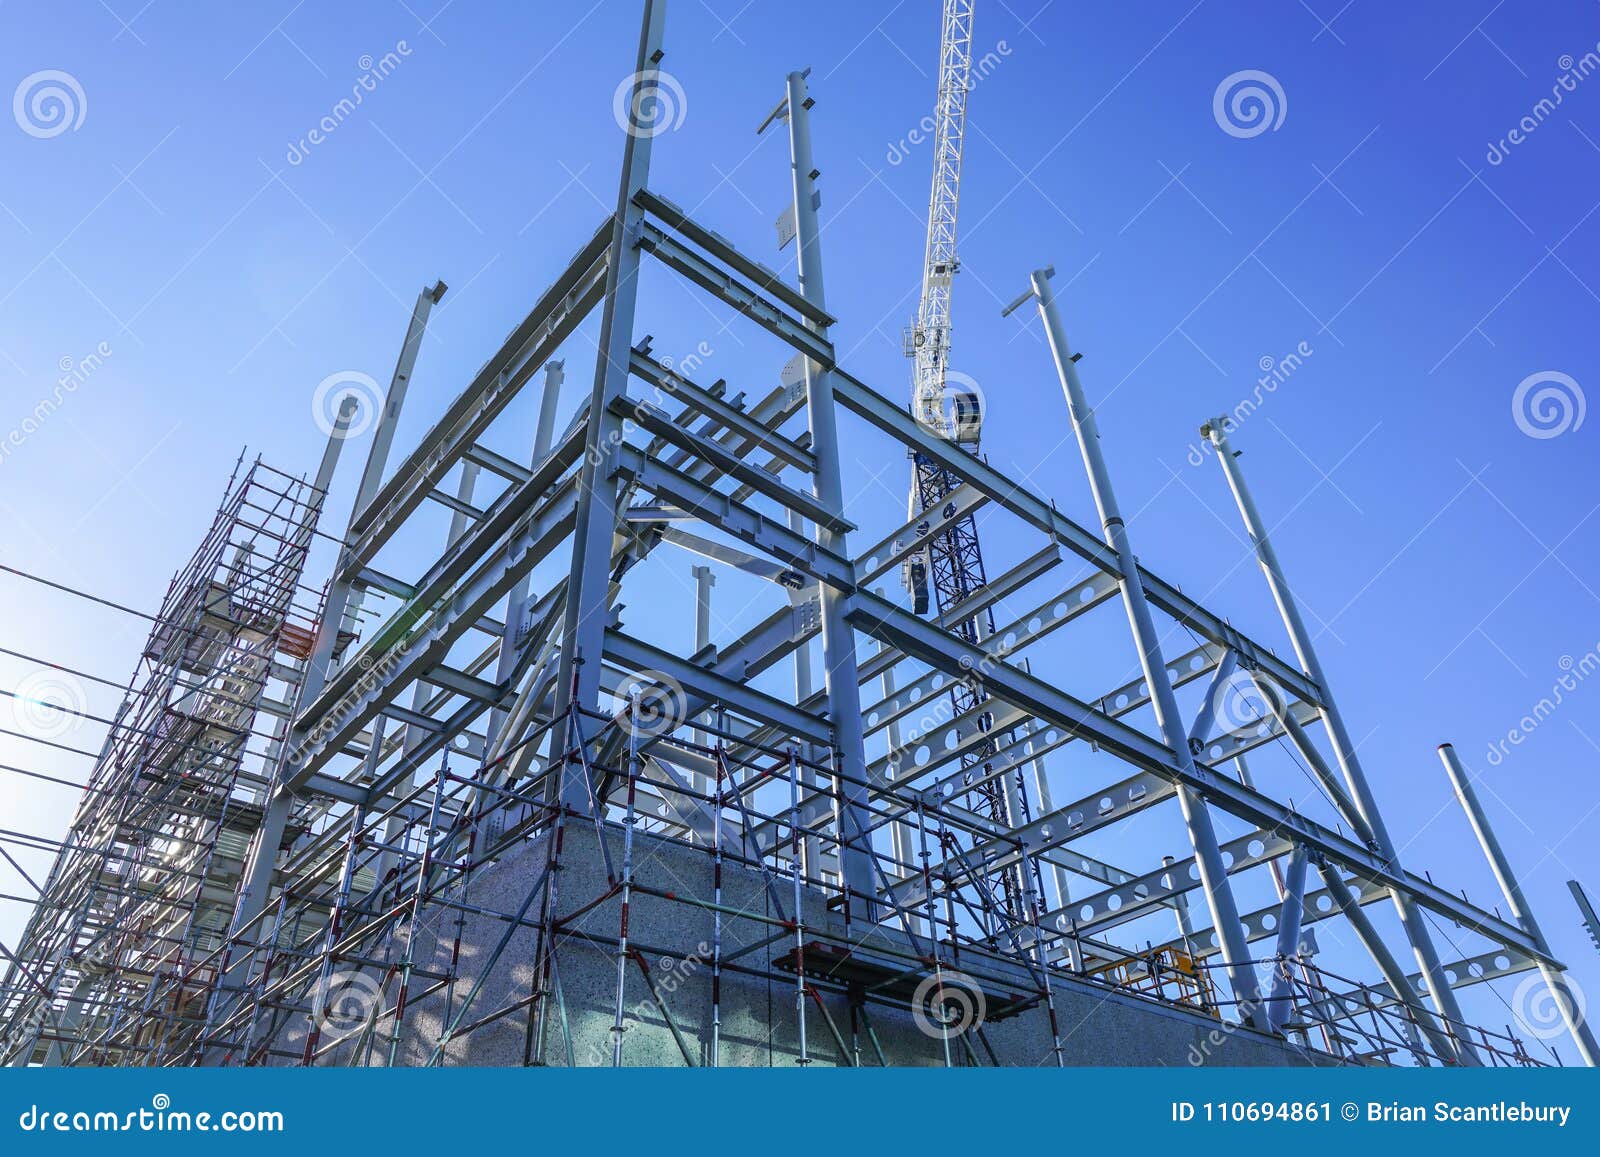 structural steel framework for new building.